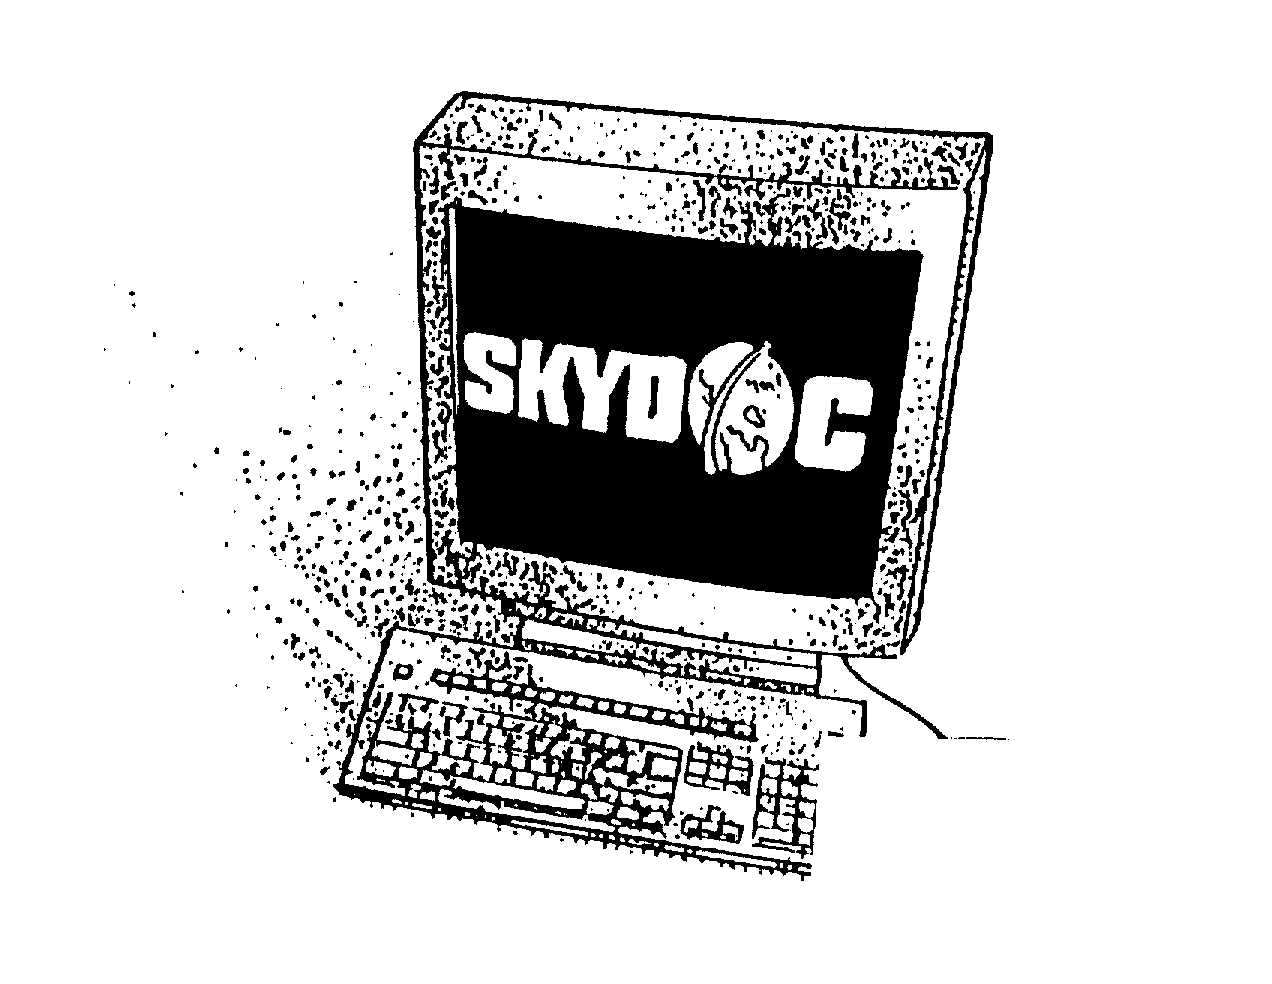 Trademark Logo SKYDOC